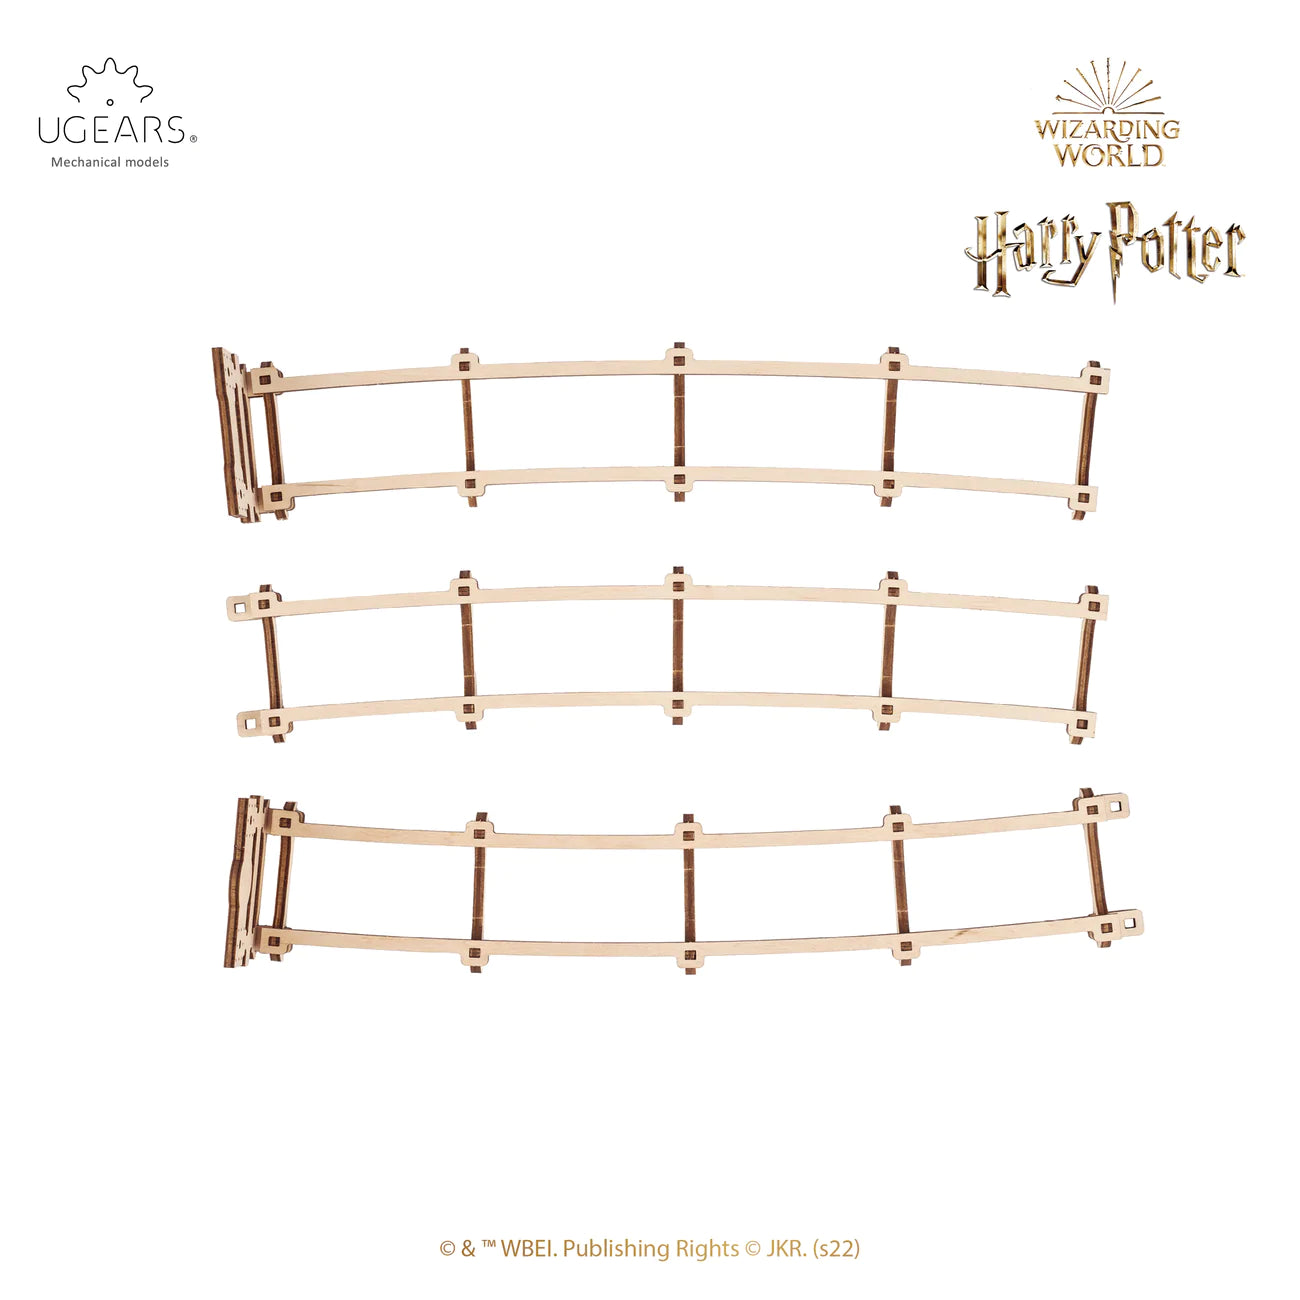 Hogwarts Express™ | Harry Potter